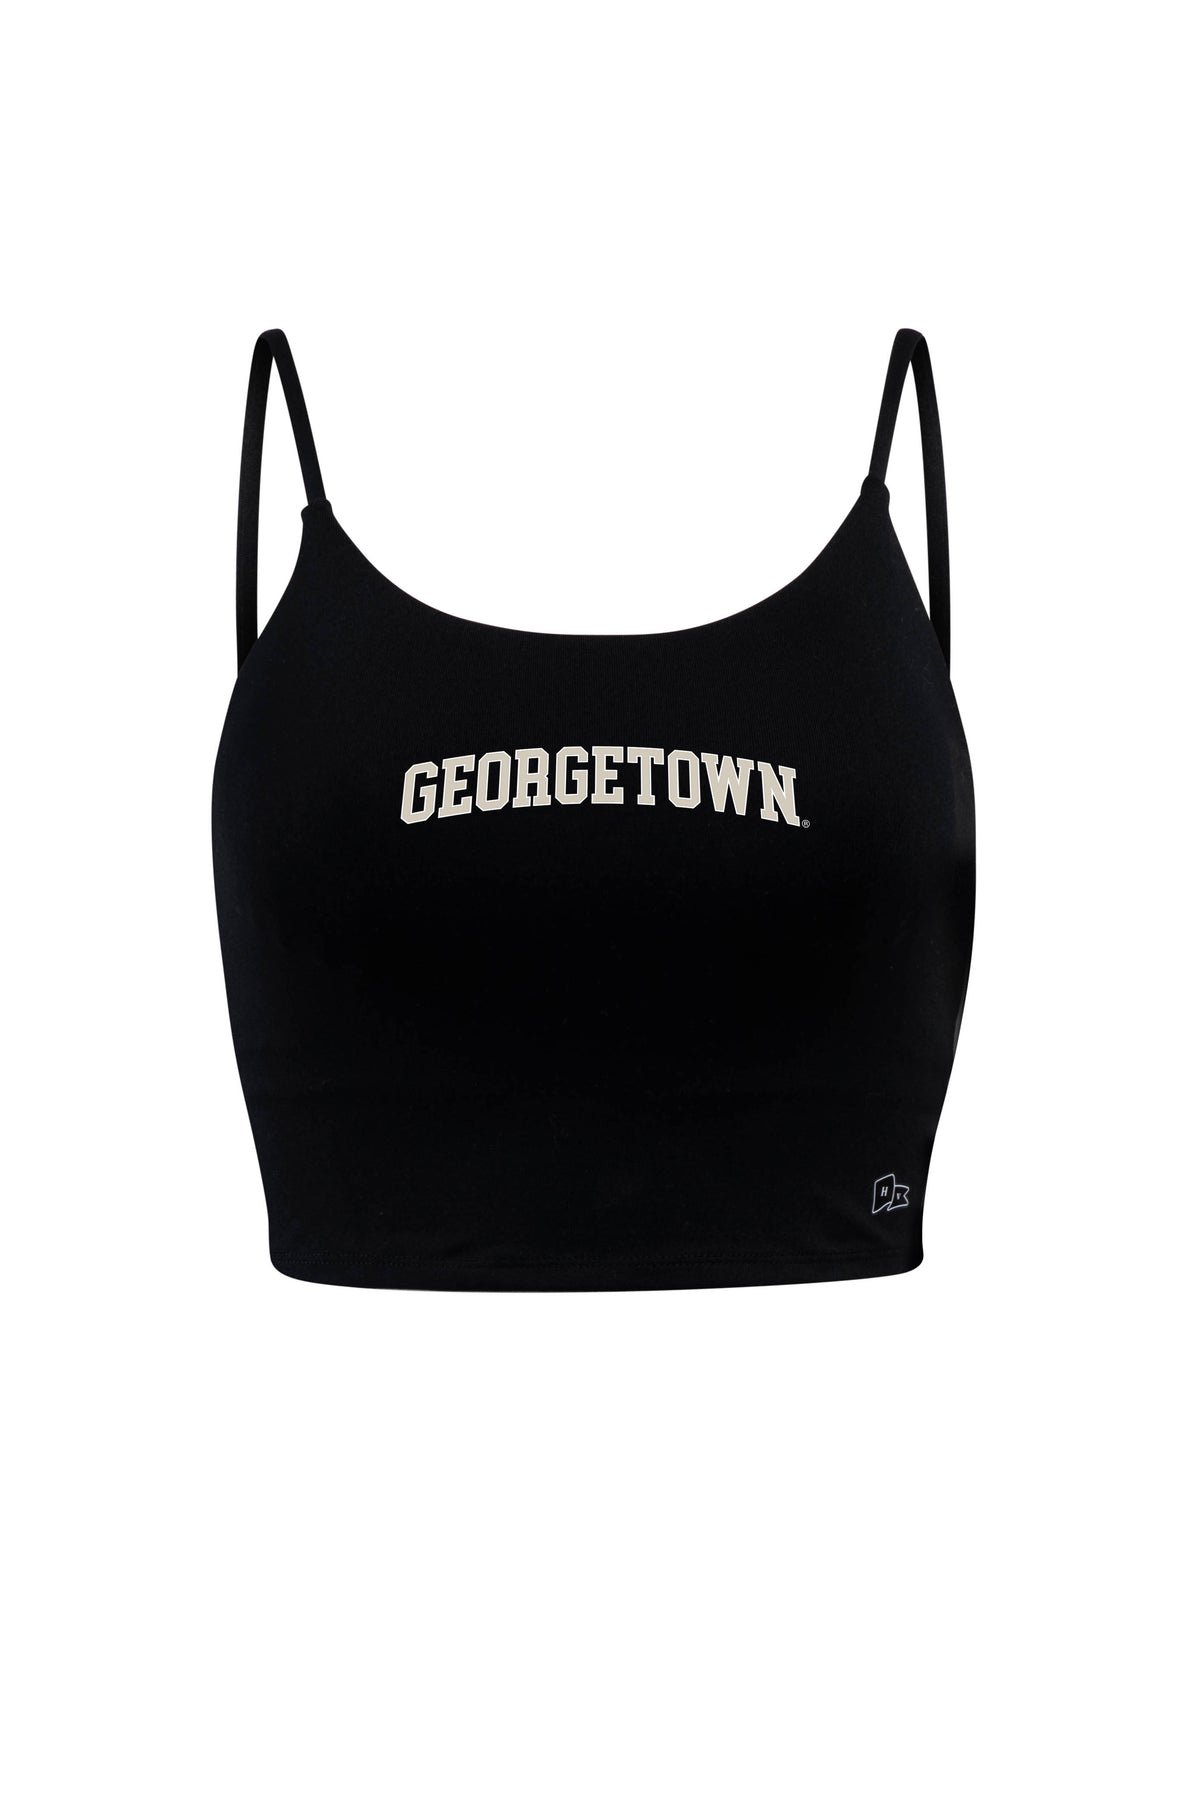 Georgetown University Bra Tank Top